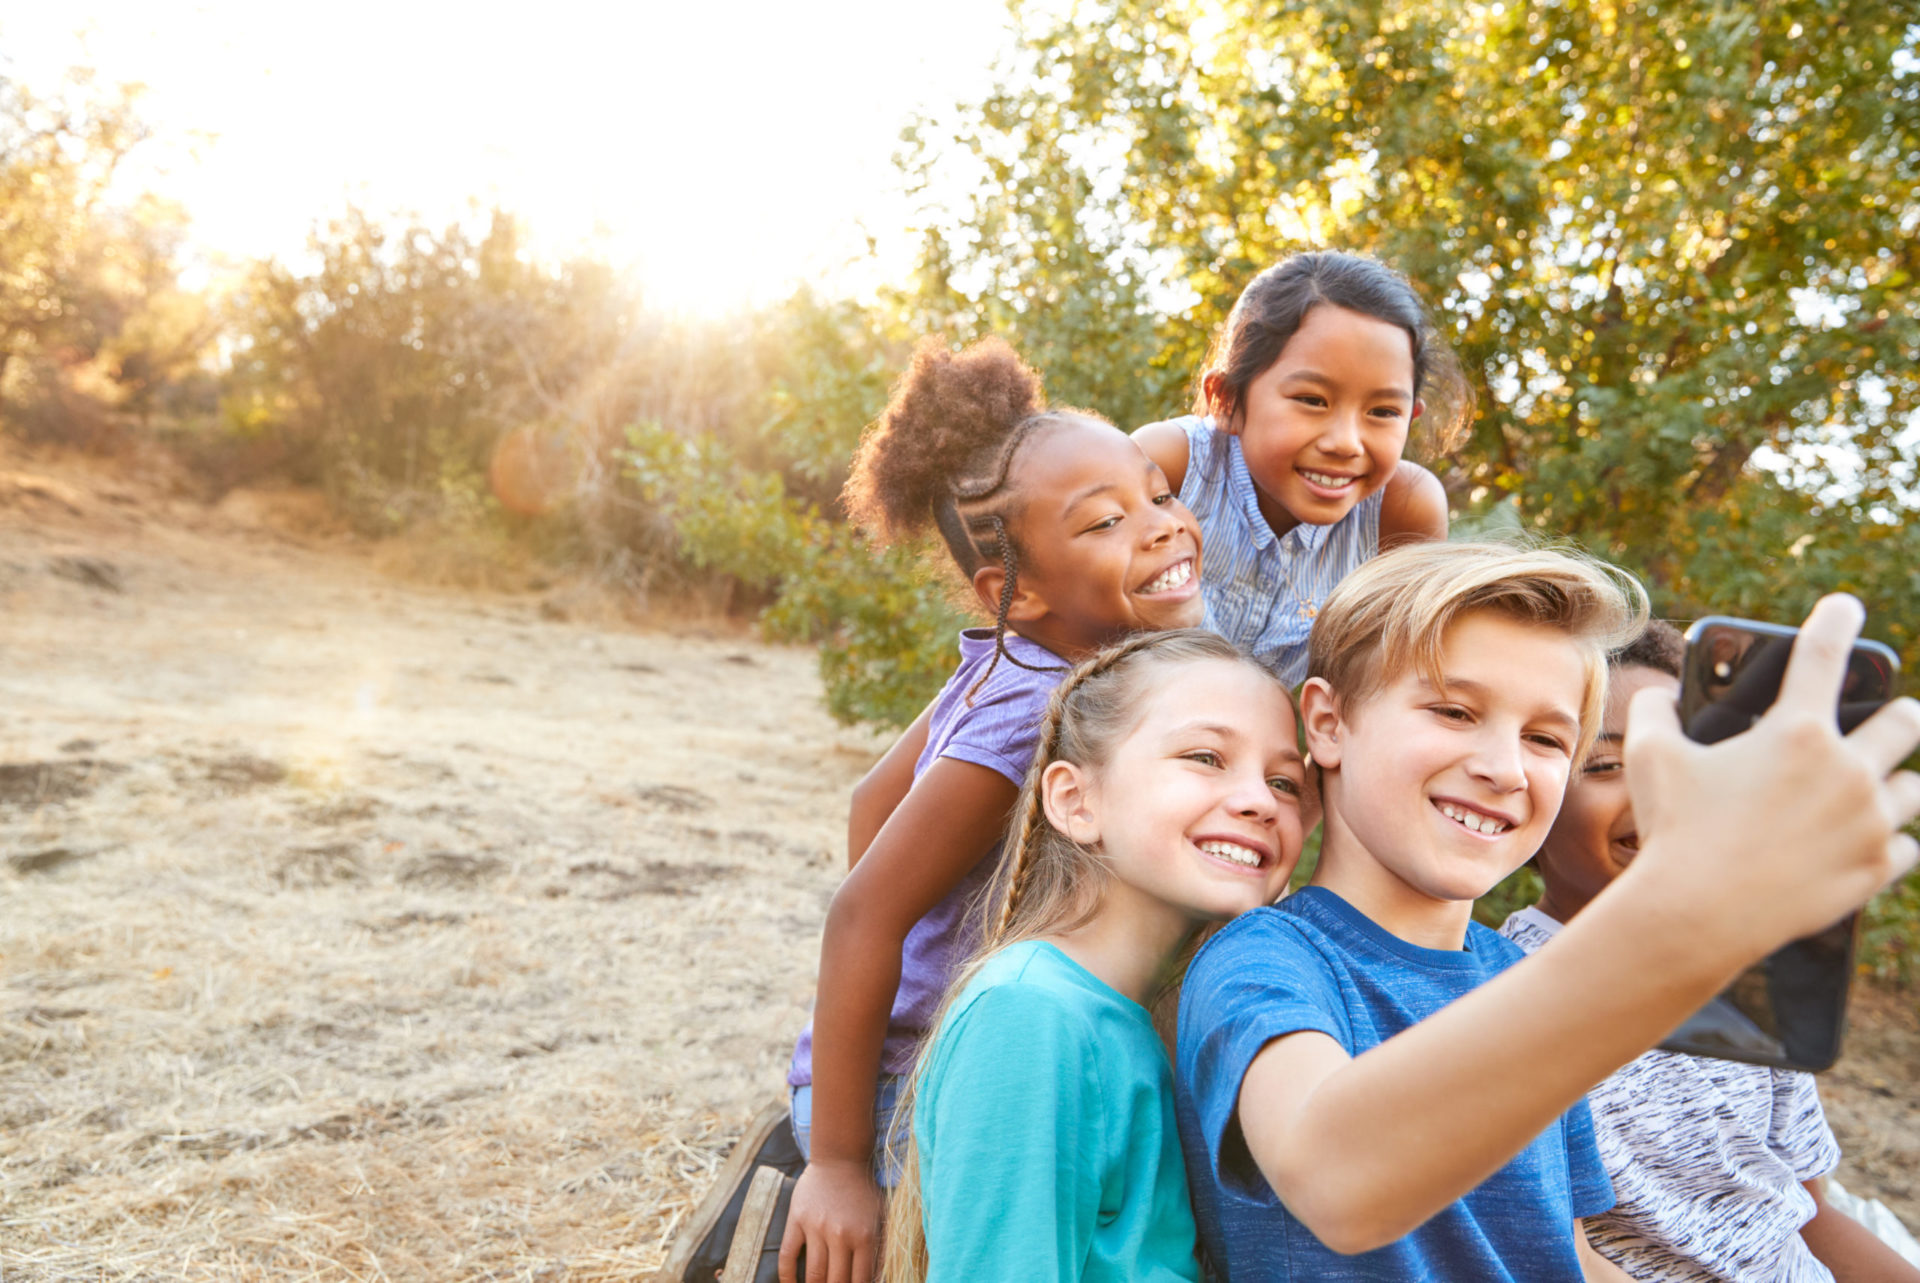 Group of five kids in sun outdoors taking selfie